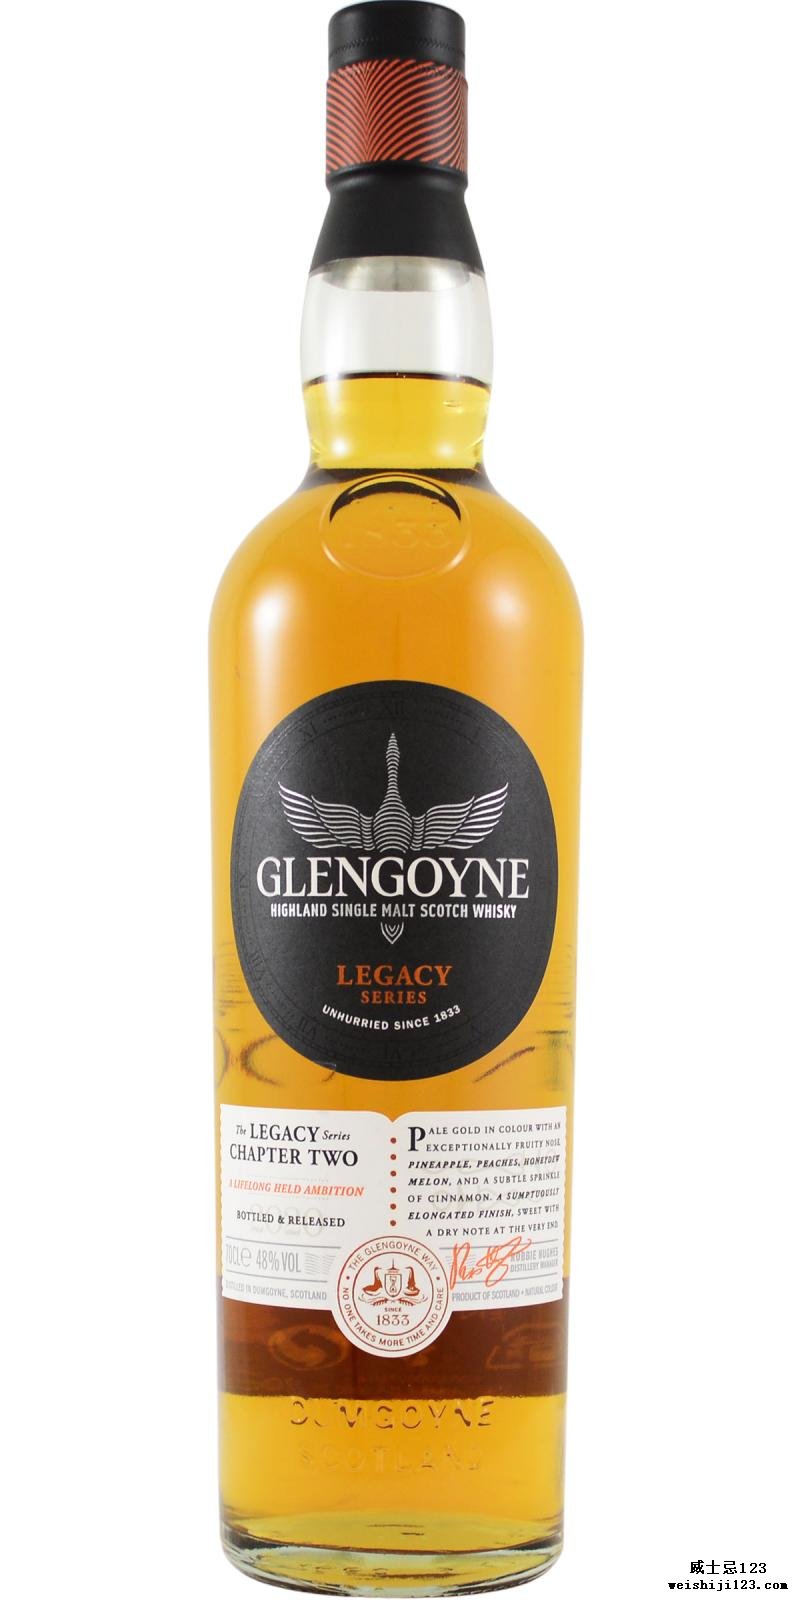 Glengoyne The Legacy Series